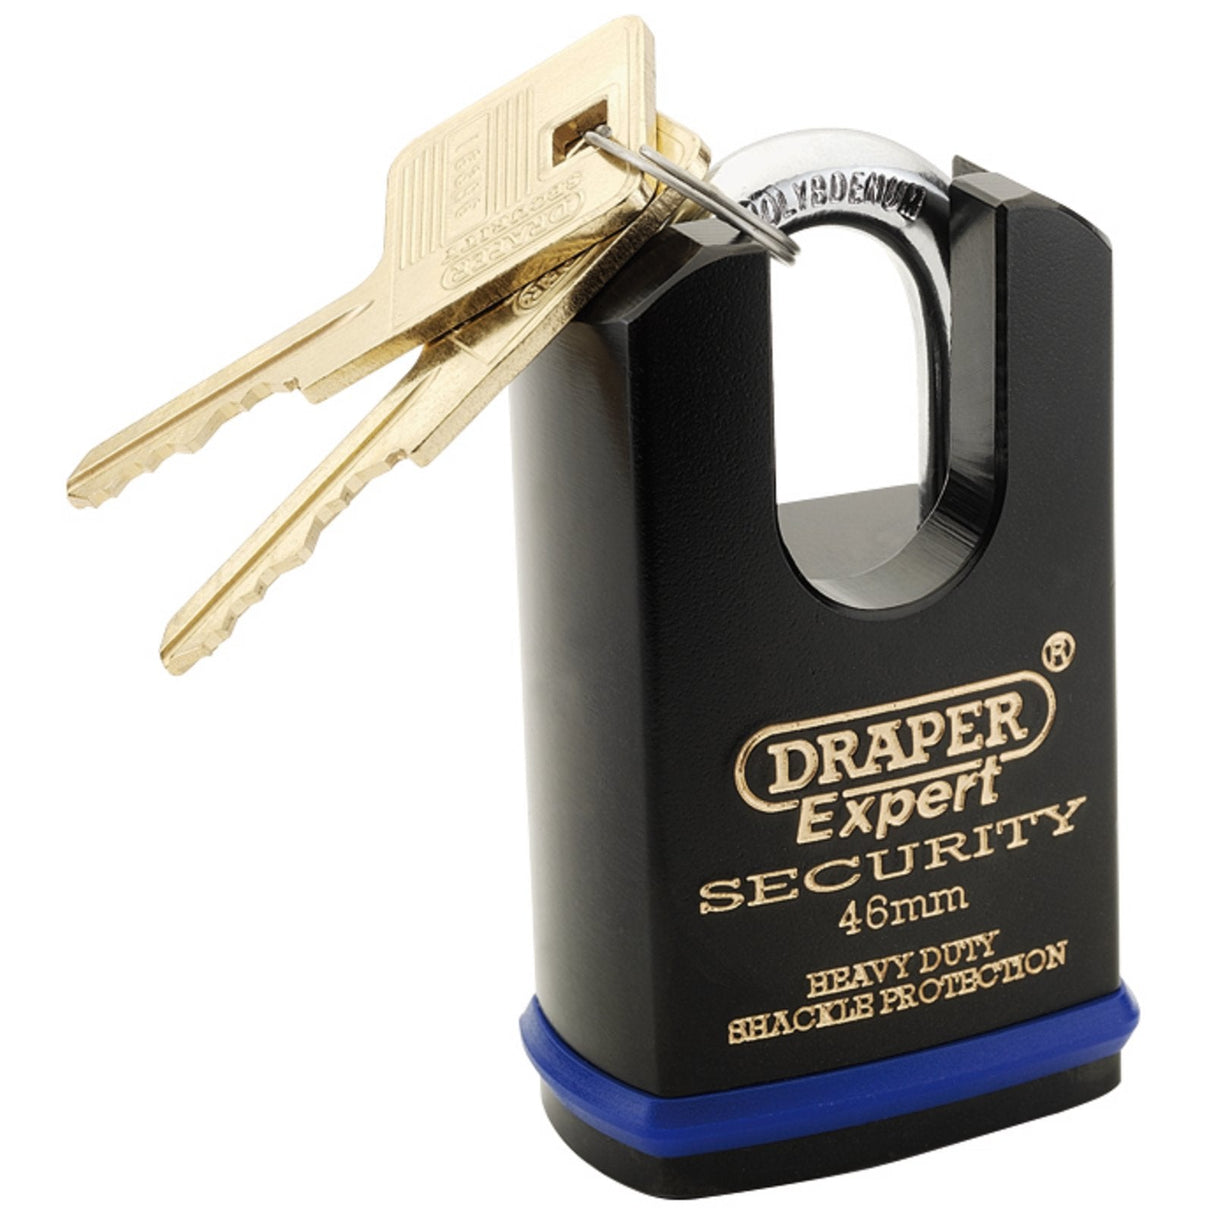 Draper Expert Heavy Duty Padlock And 2 Keys With Shrouded Shackle, 46mm - 8312/46 - Farming Parts